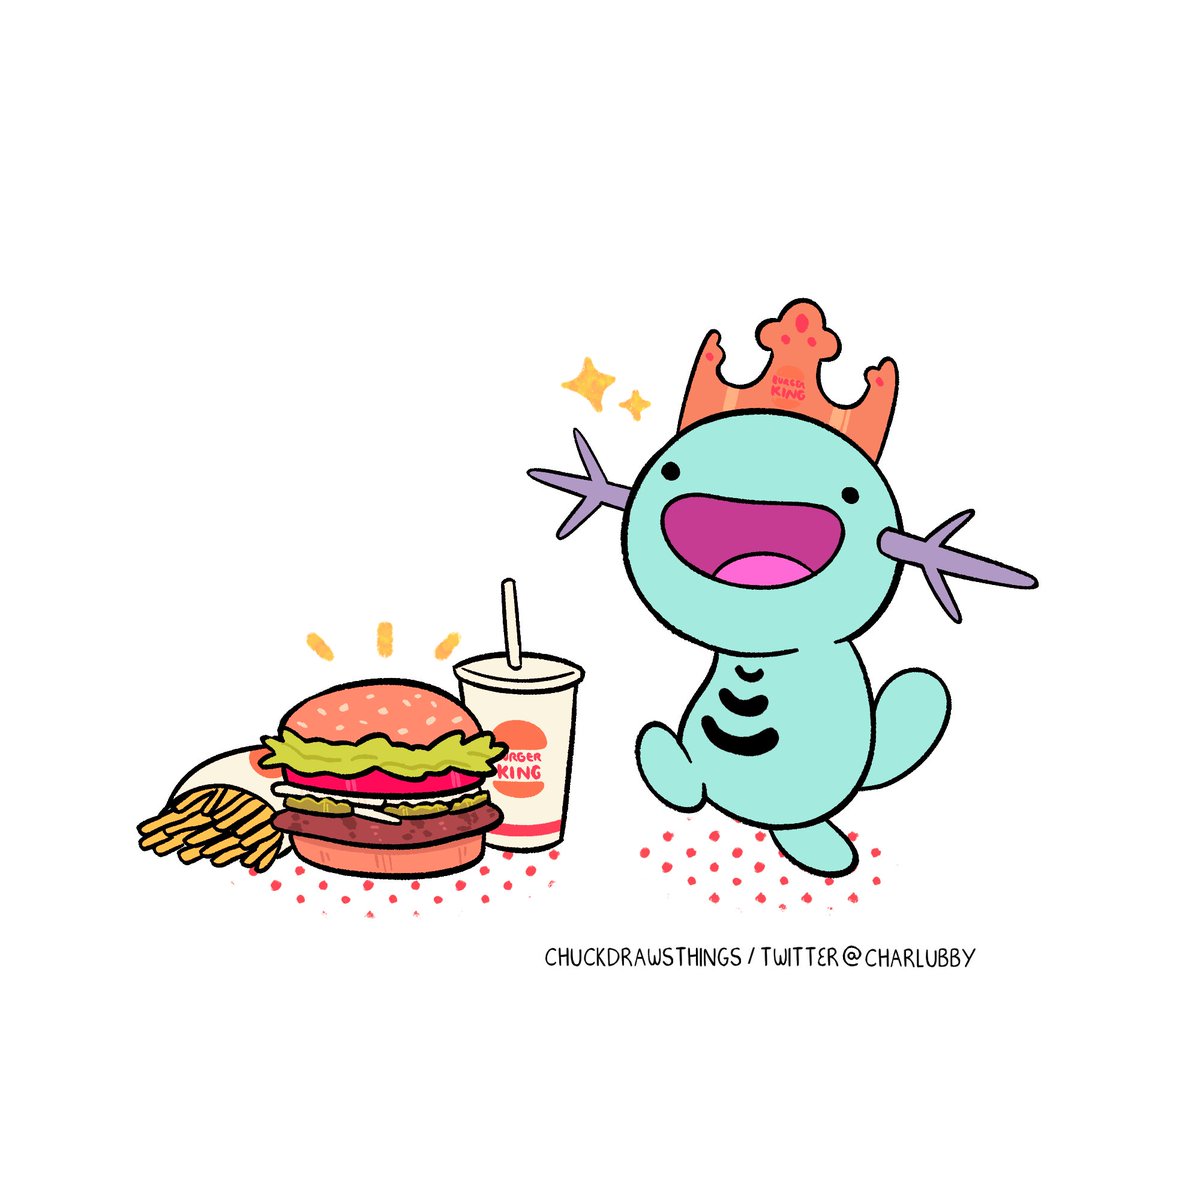 no humans food pokemon (creature) burger open mouth white